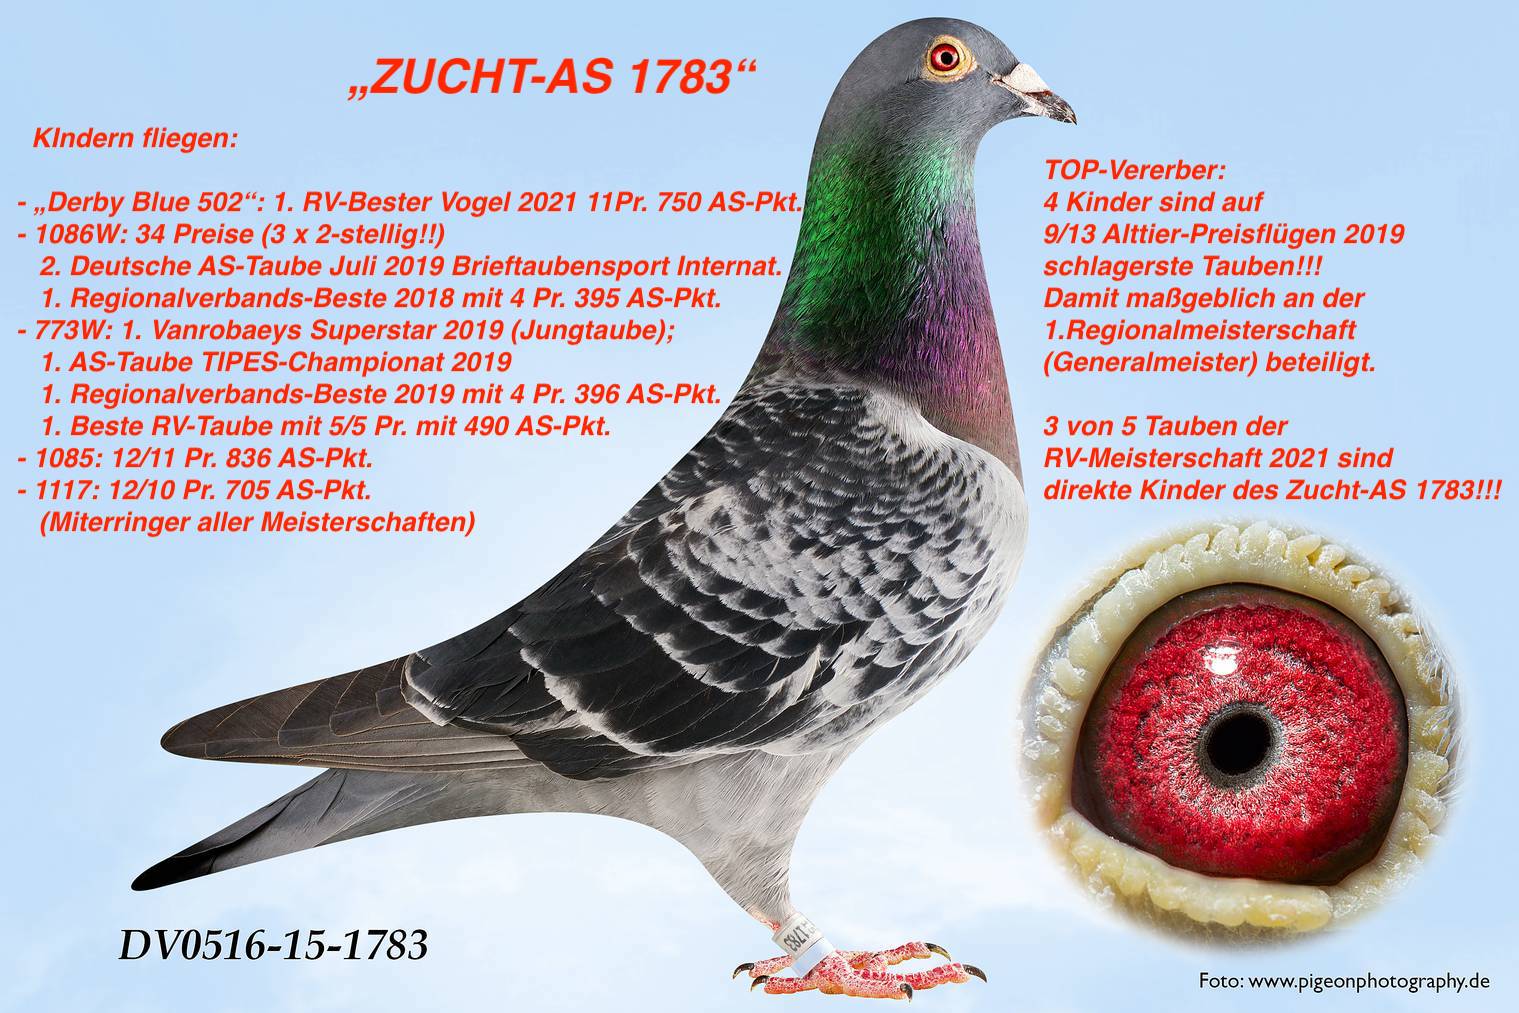 ZUCHT-AS 1783